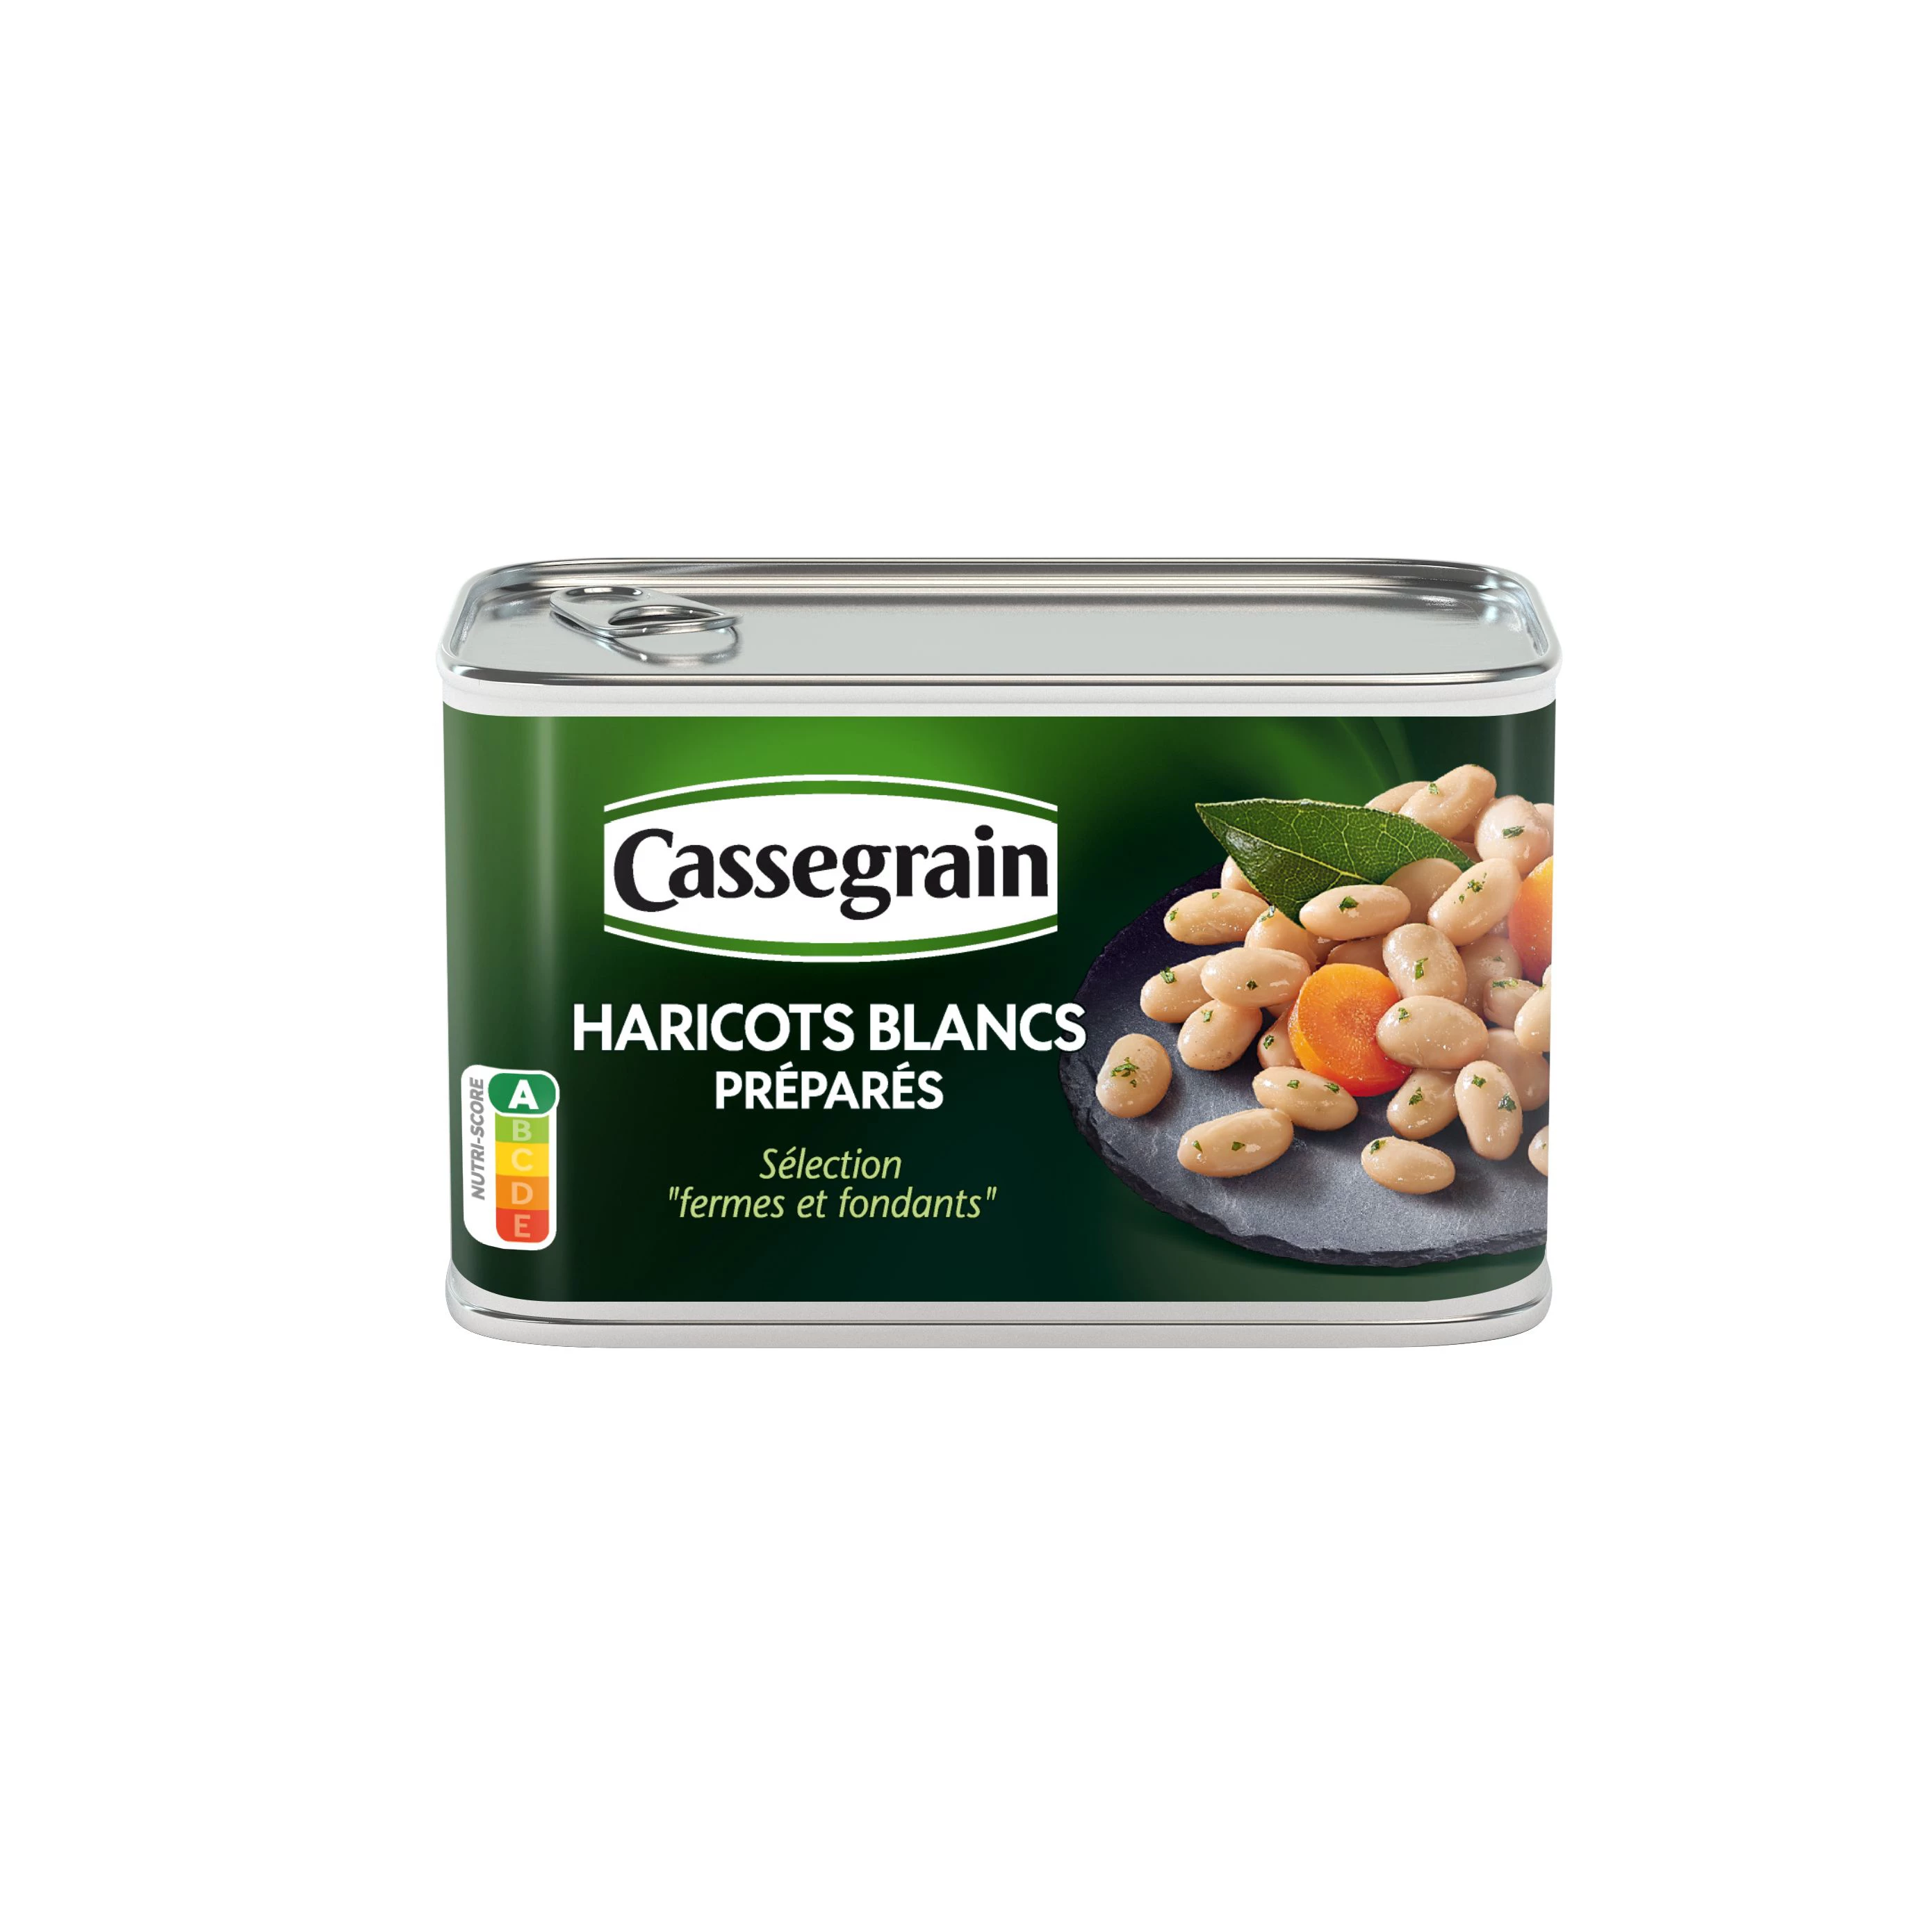 White Beans Prepared Firm and Soft, 250g - CASSEGRAIN